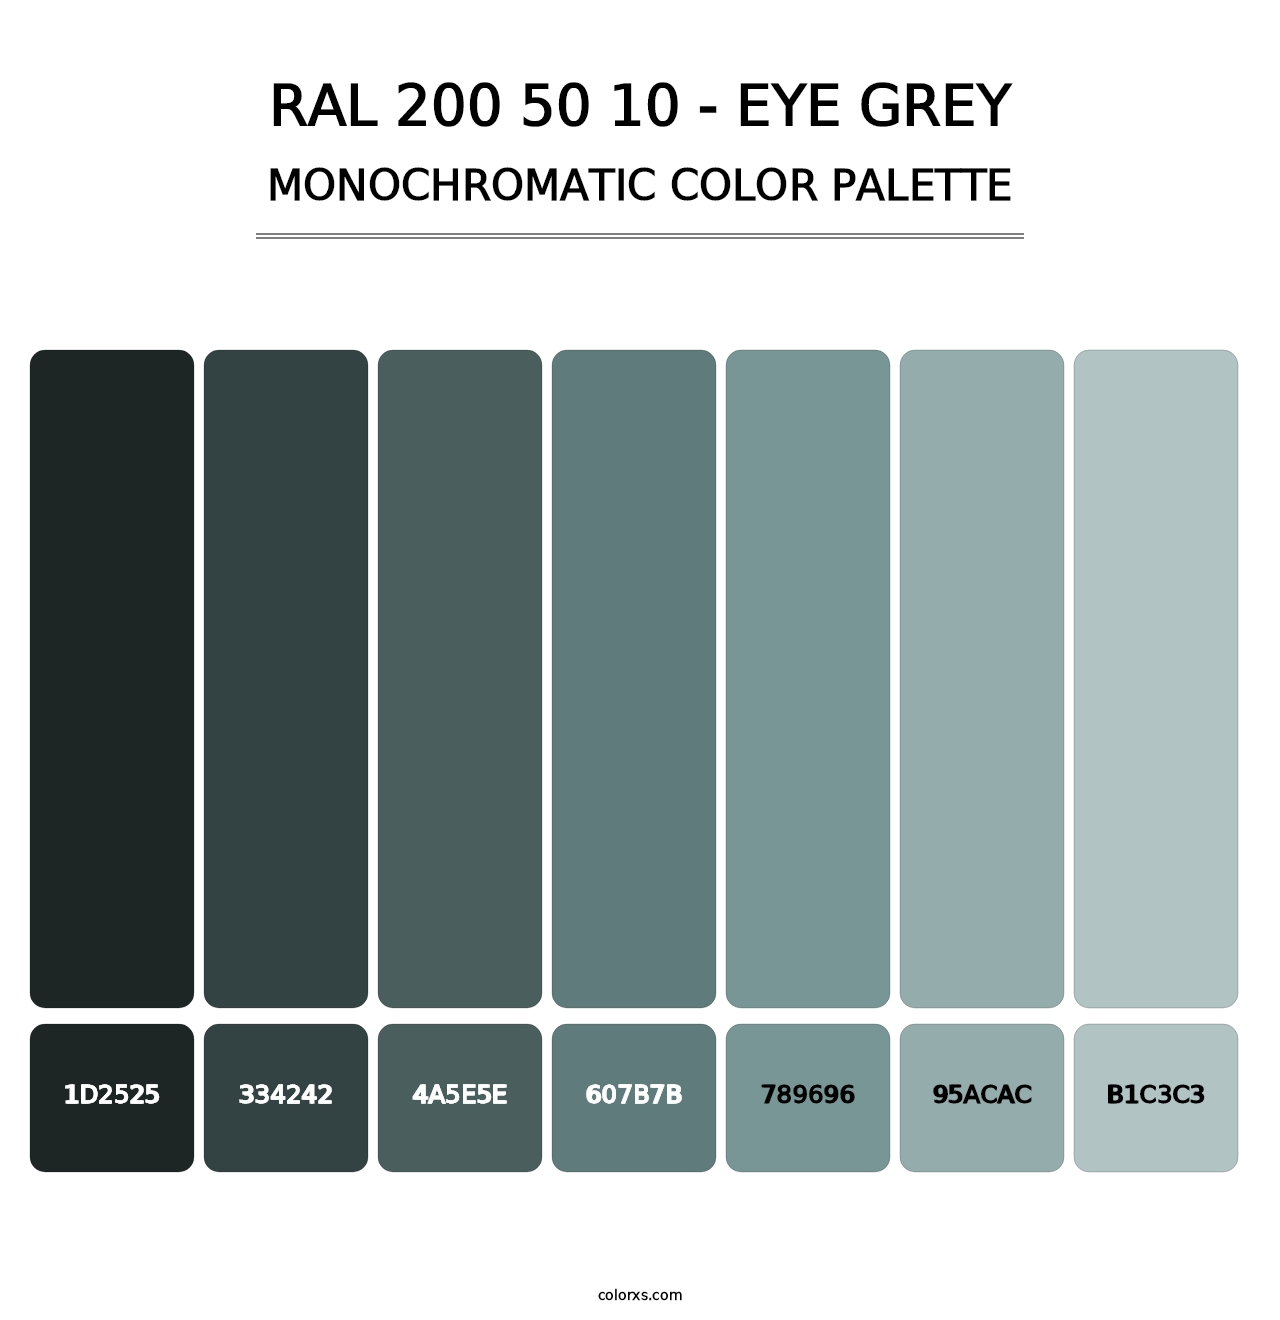 RAL 200 50 10 - Eye Grey - Monochromatic Color Palette